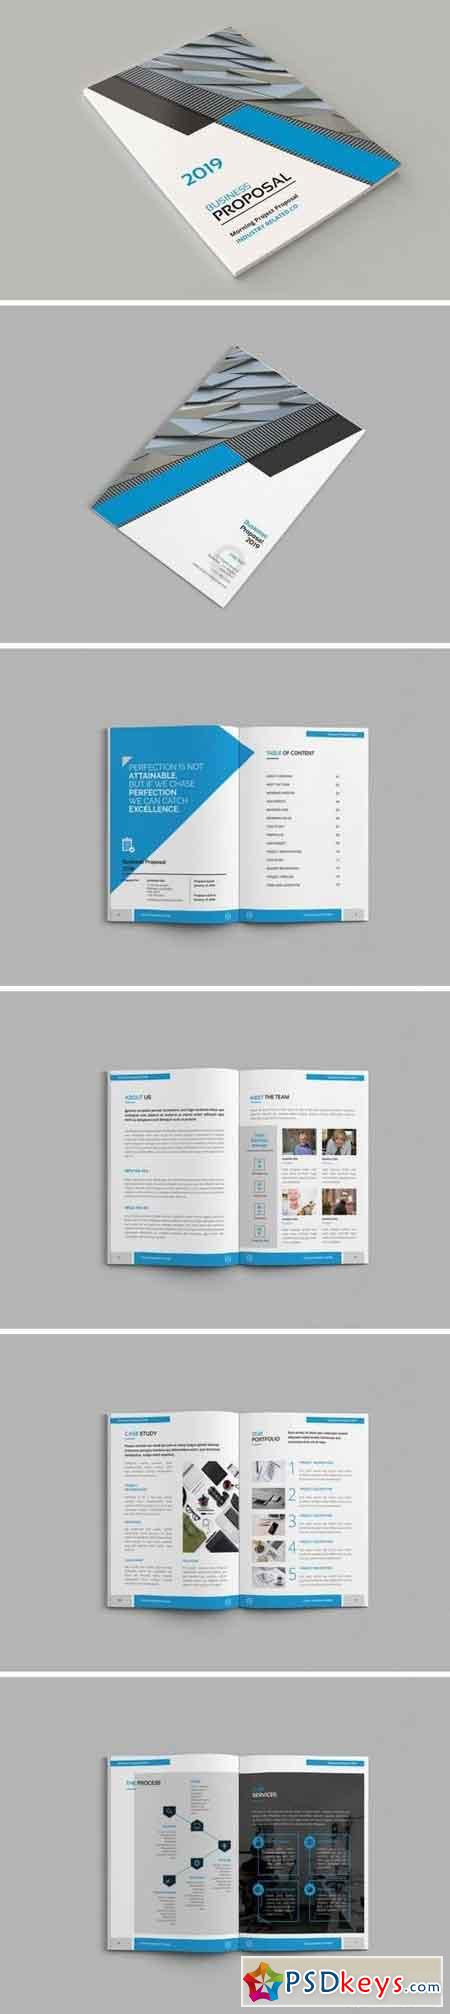 Yuzn - A4 Proposal Brochure Template